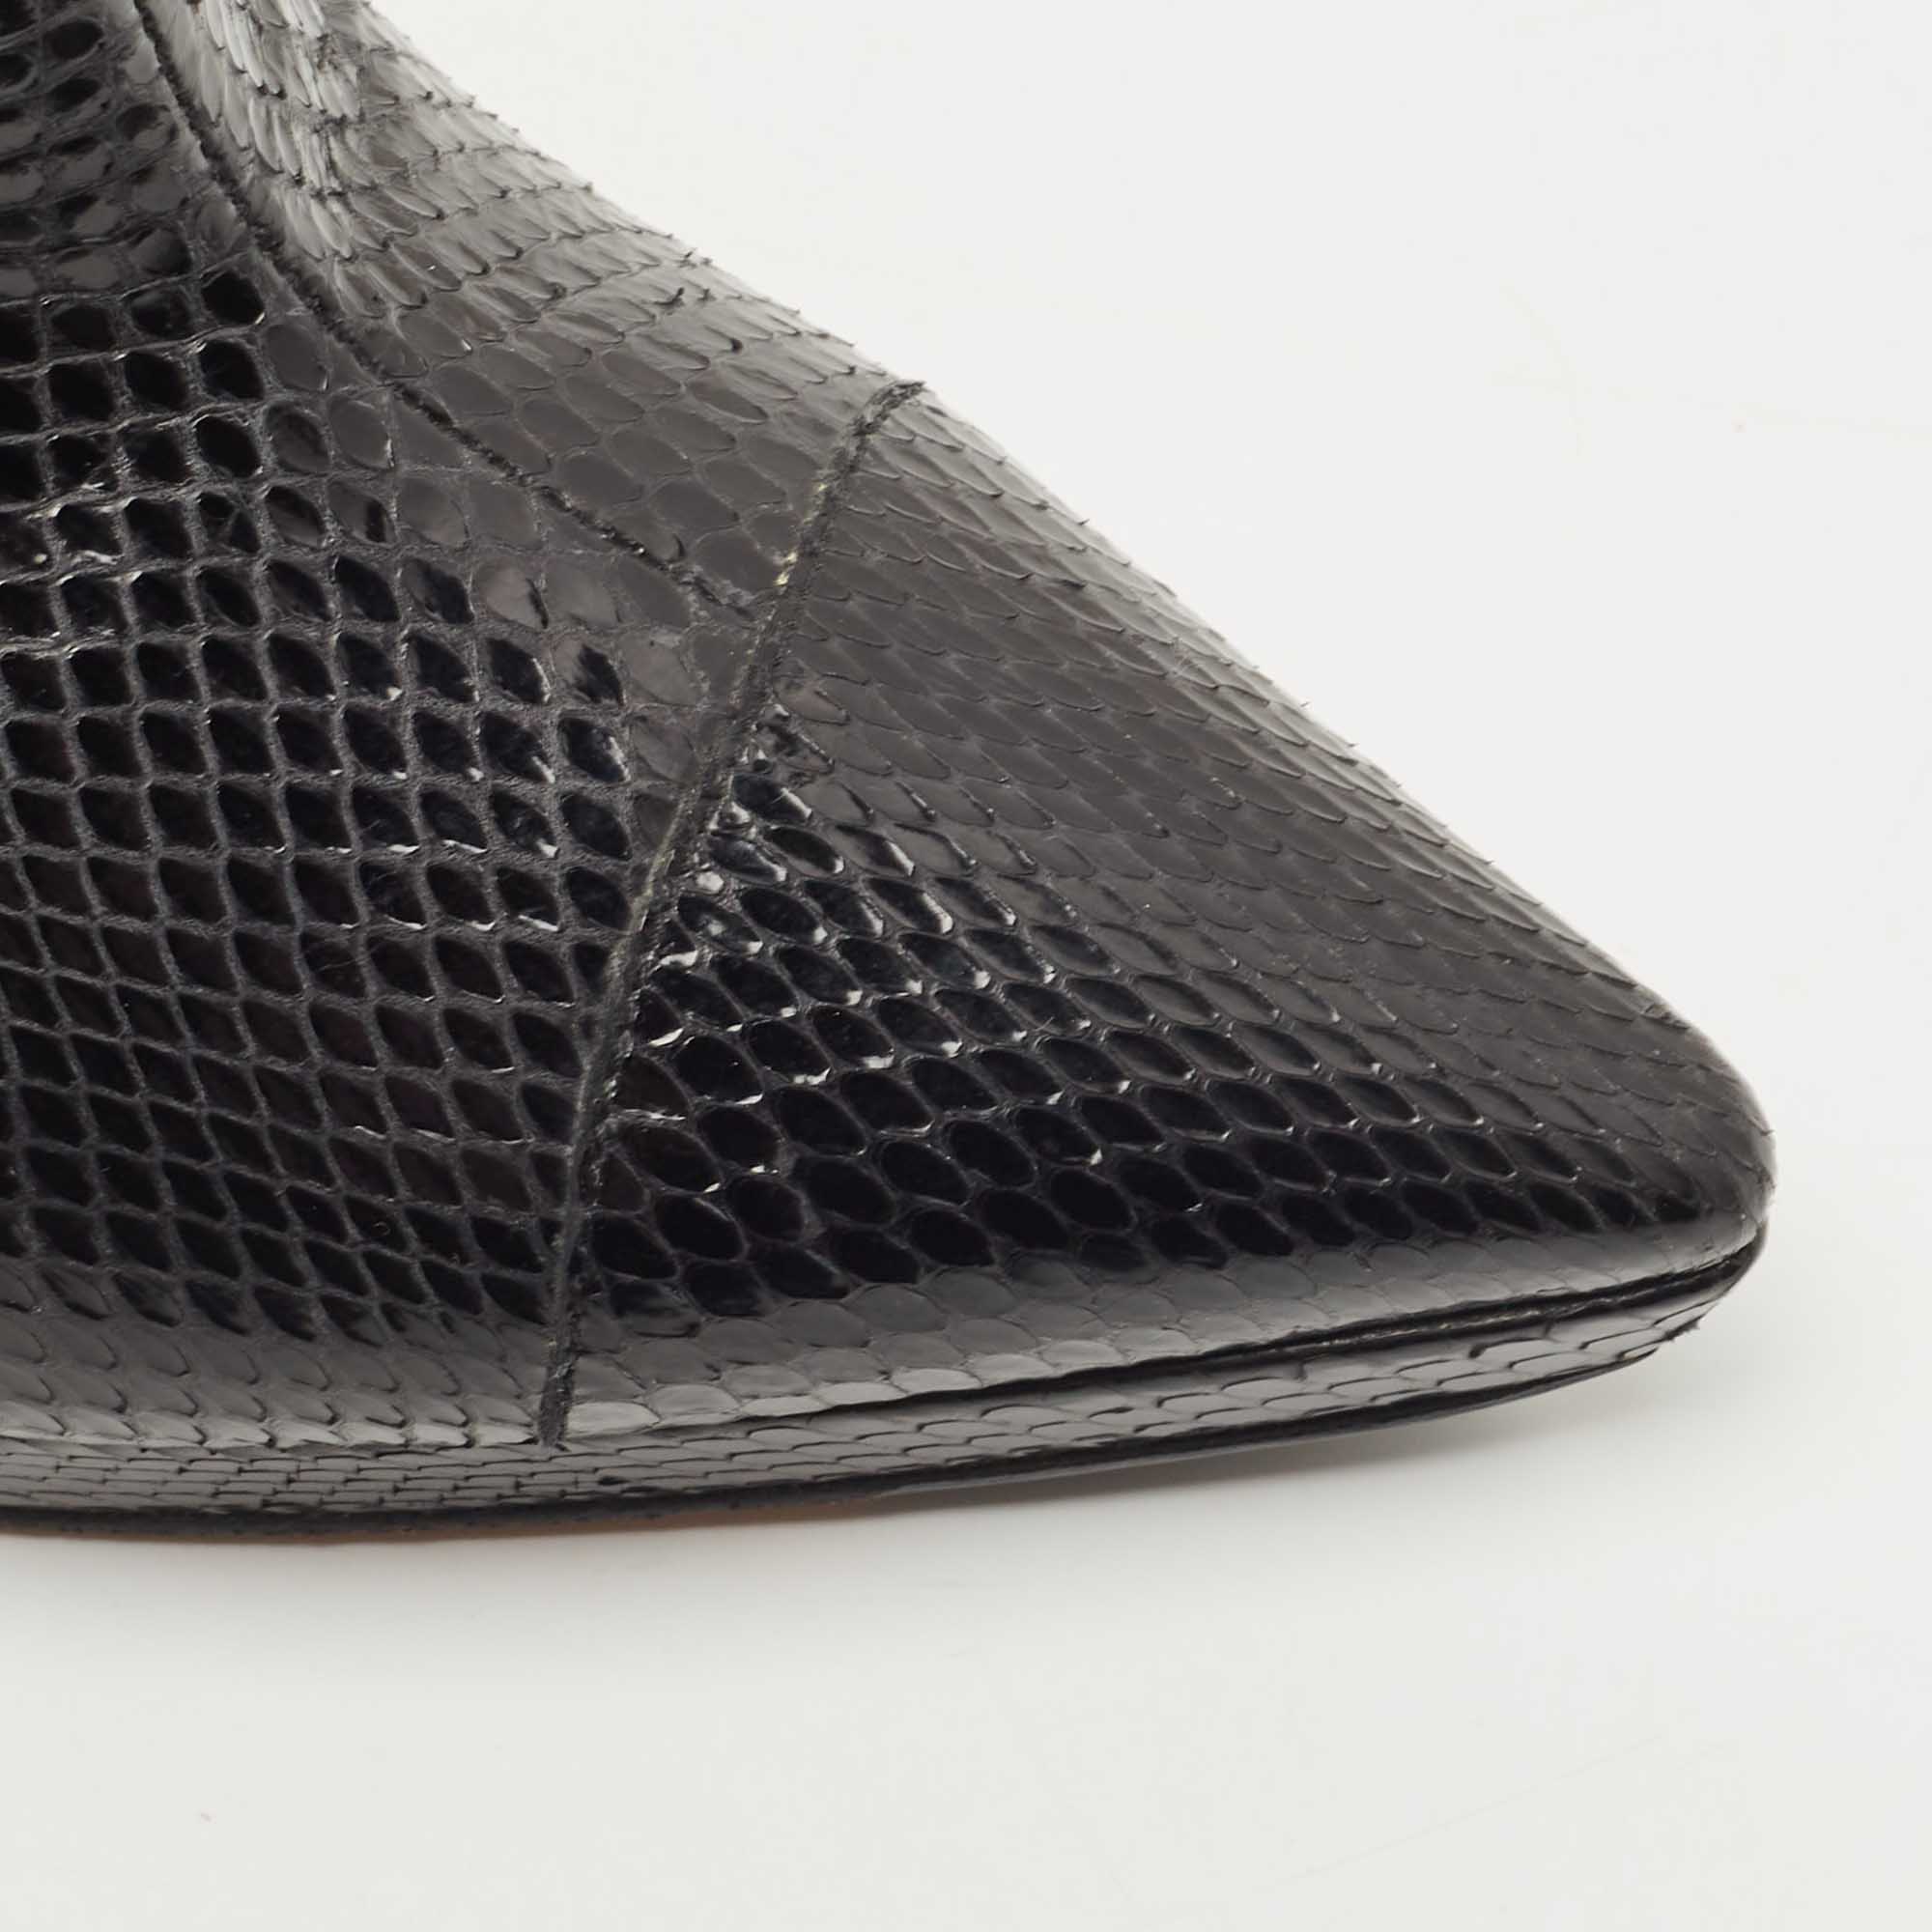 Jimmy Choo Black Python Leather Peep-Toe Ankle Booties Size 38.5